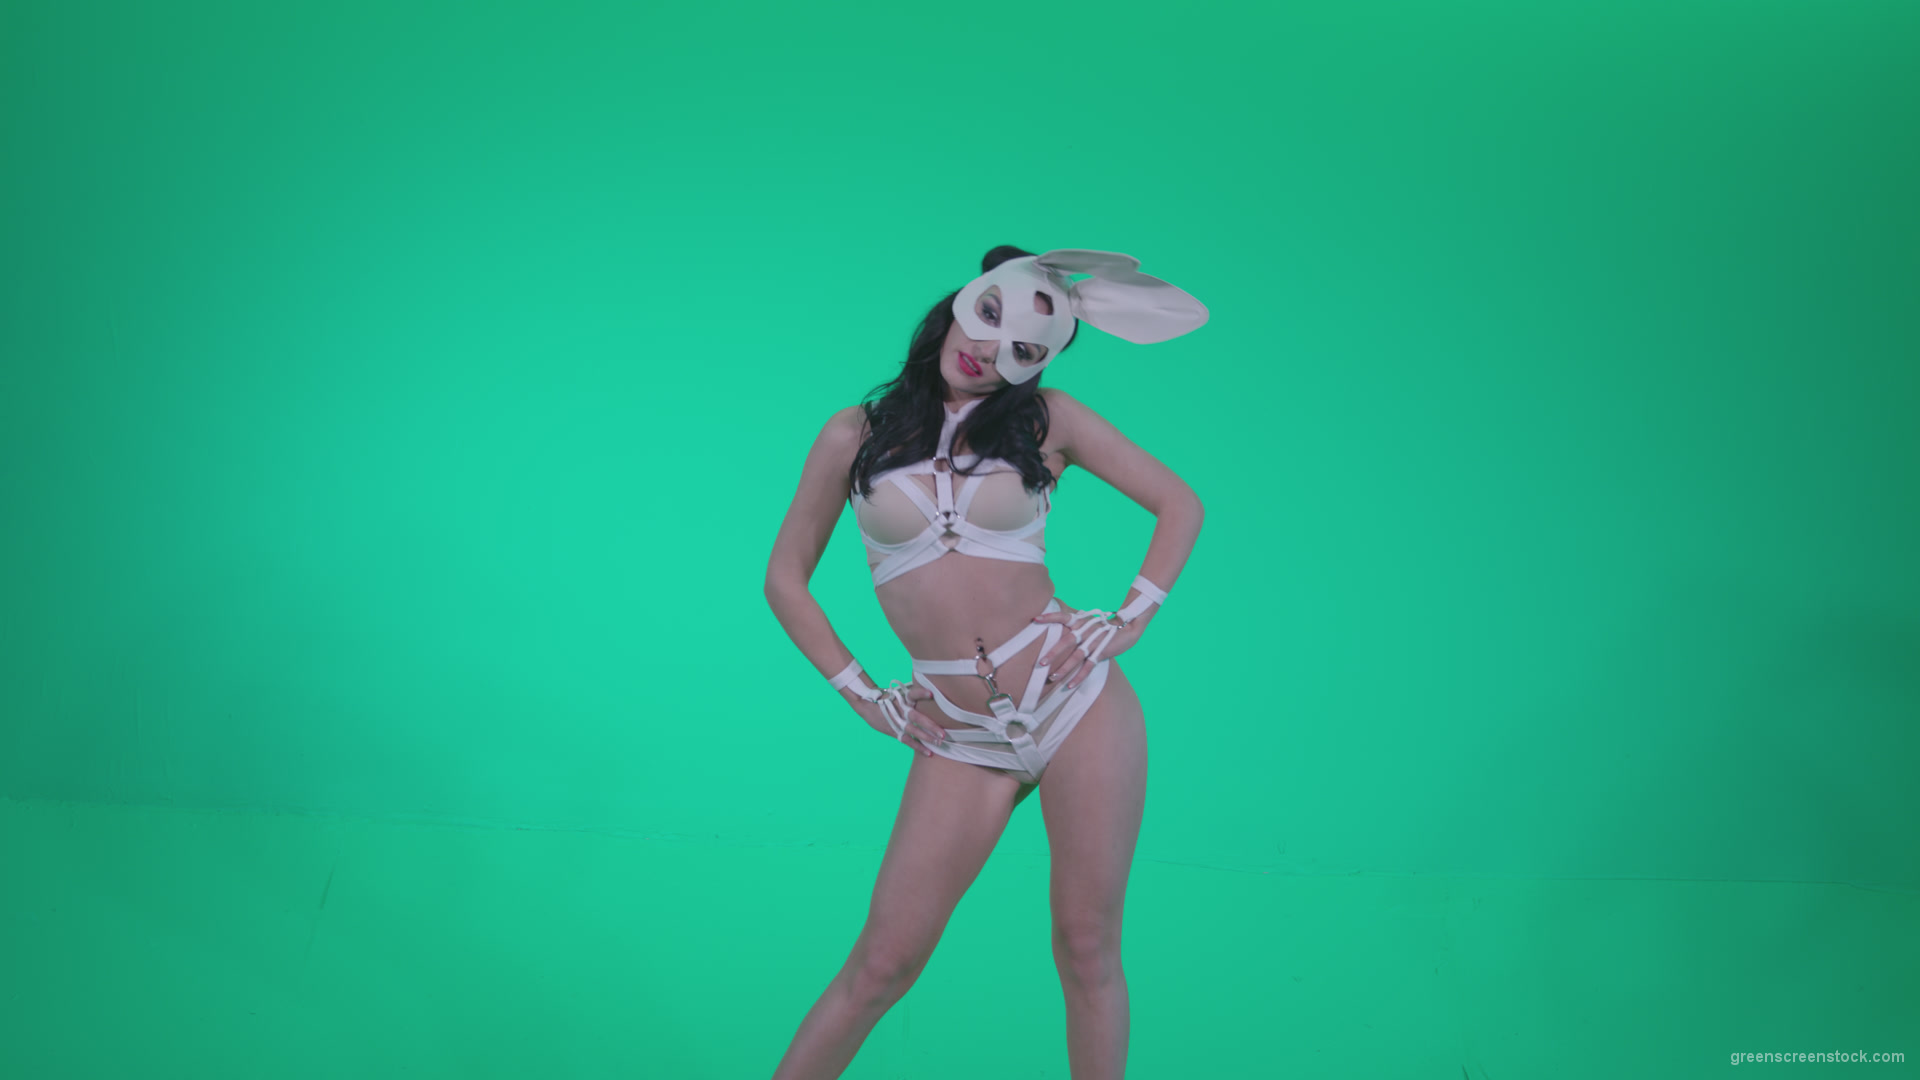 Go-go-Dancer-White-Rabbit-m9-Green-Screen-Video-Footage_002 Green Screen Stock